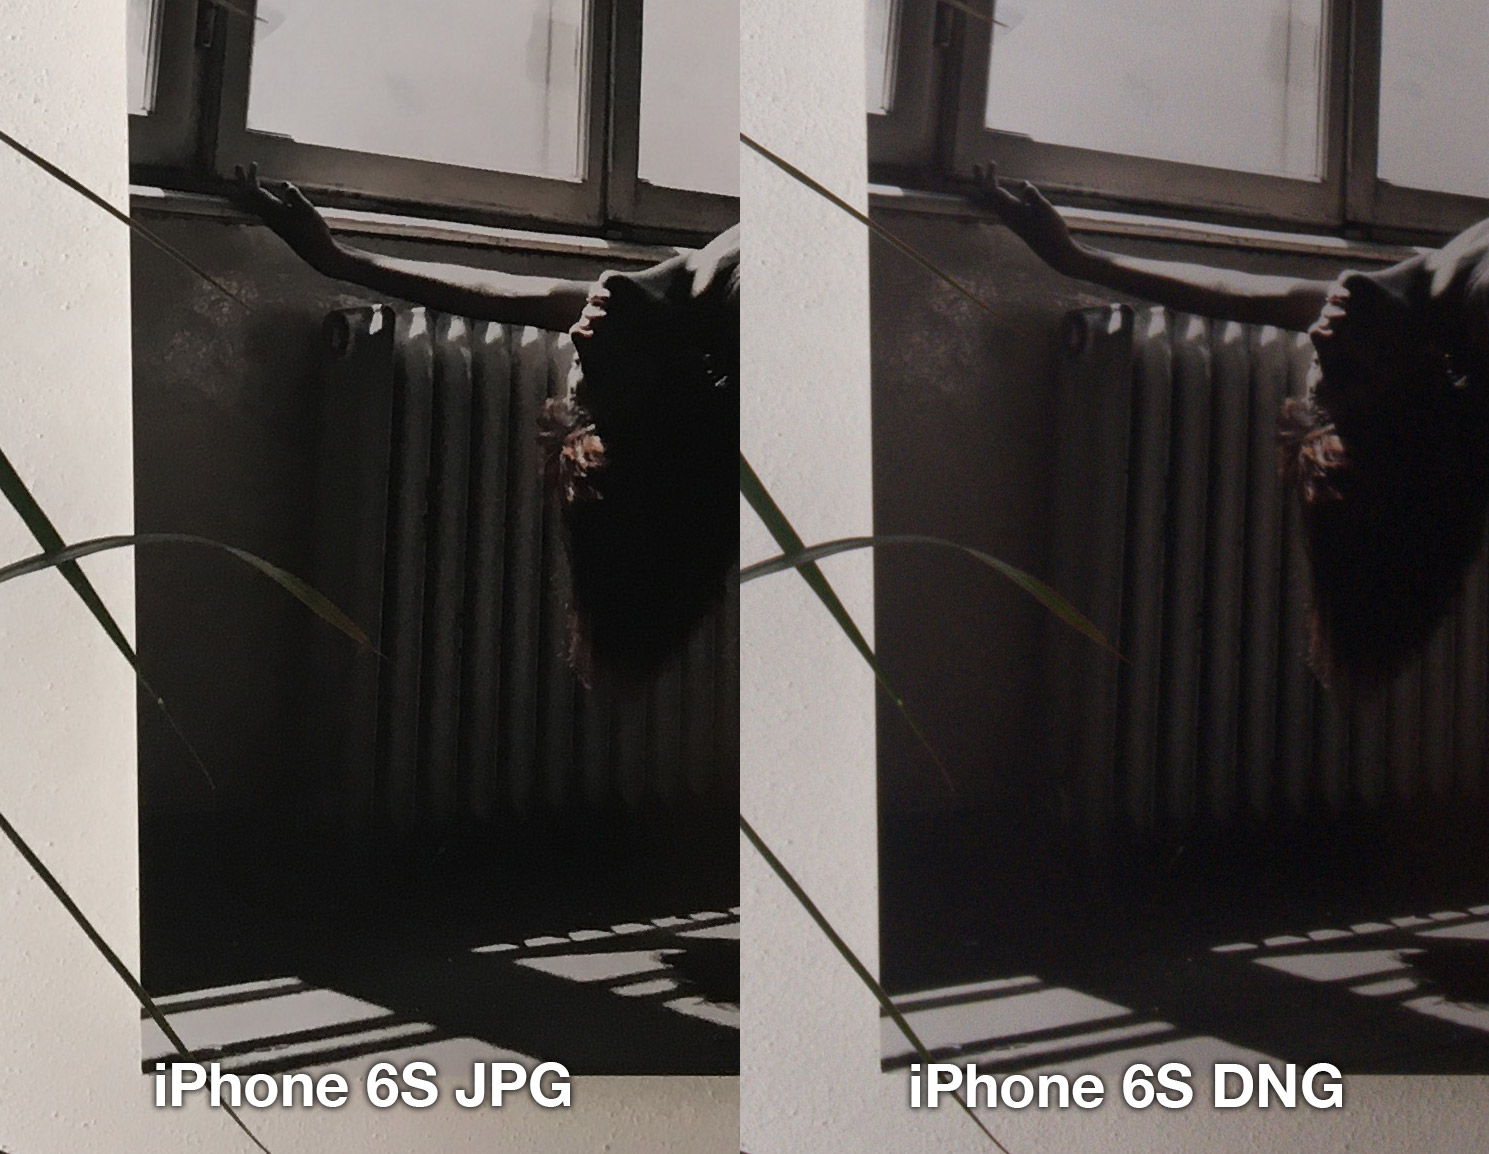 iphone-6s-lightroom-jpg-vs-dng-1